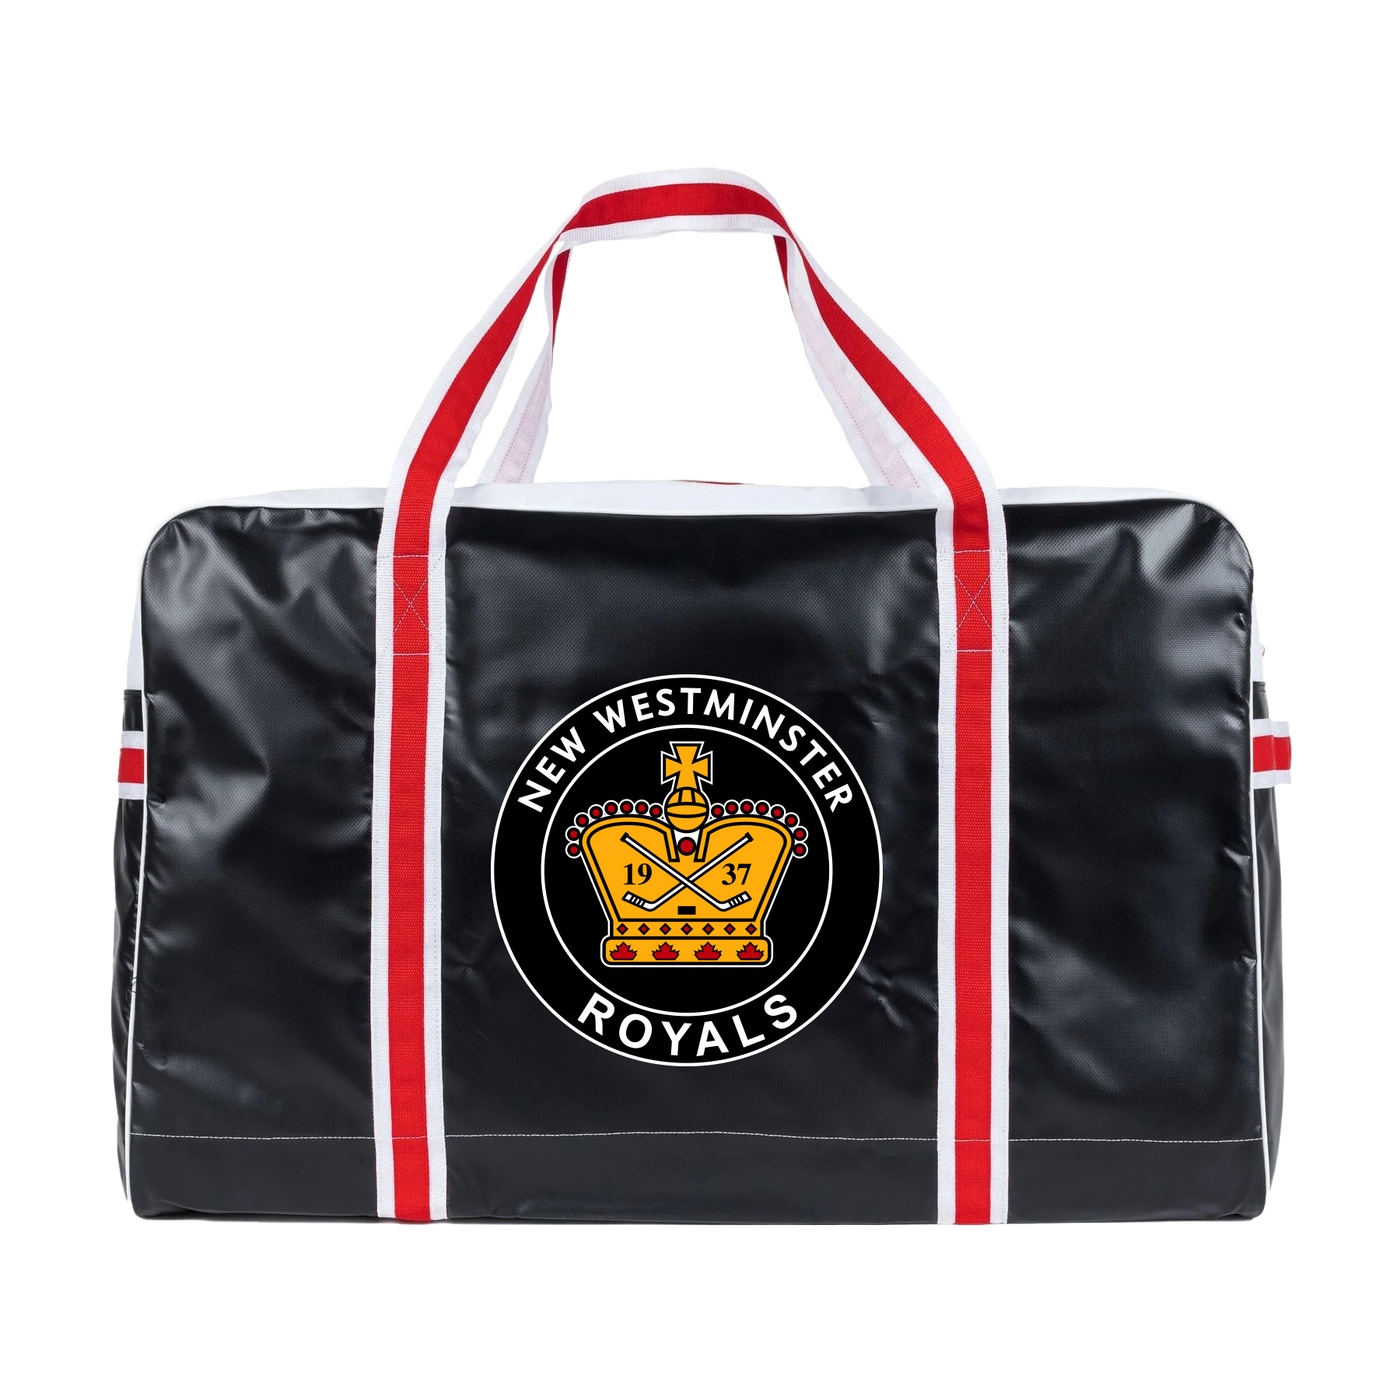 New West Royals -- Warrior Goalie Hockey Bag